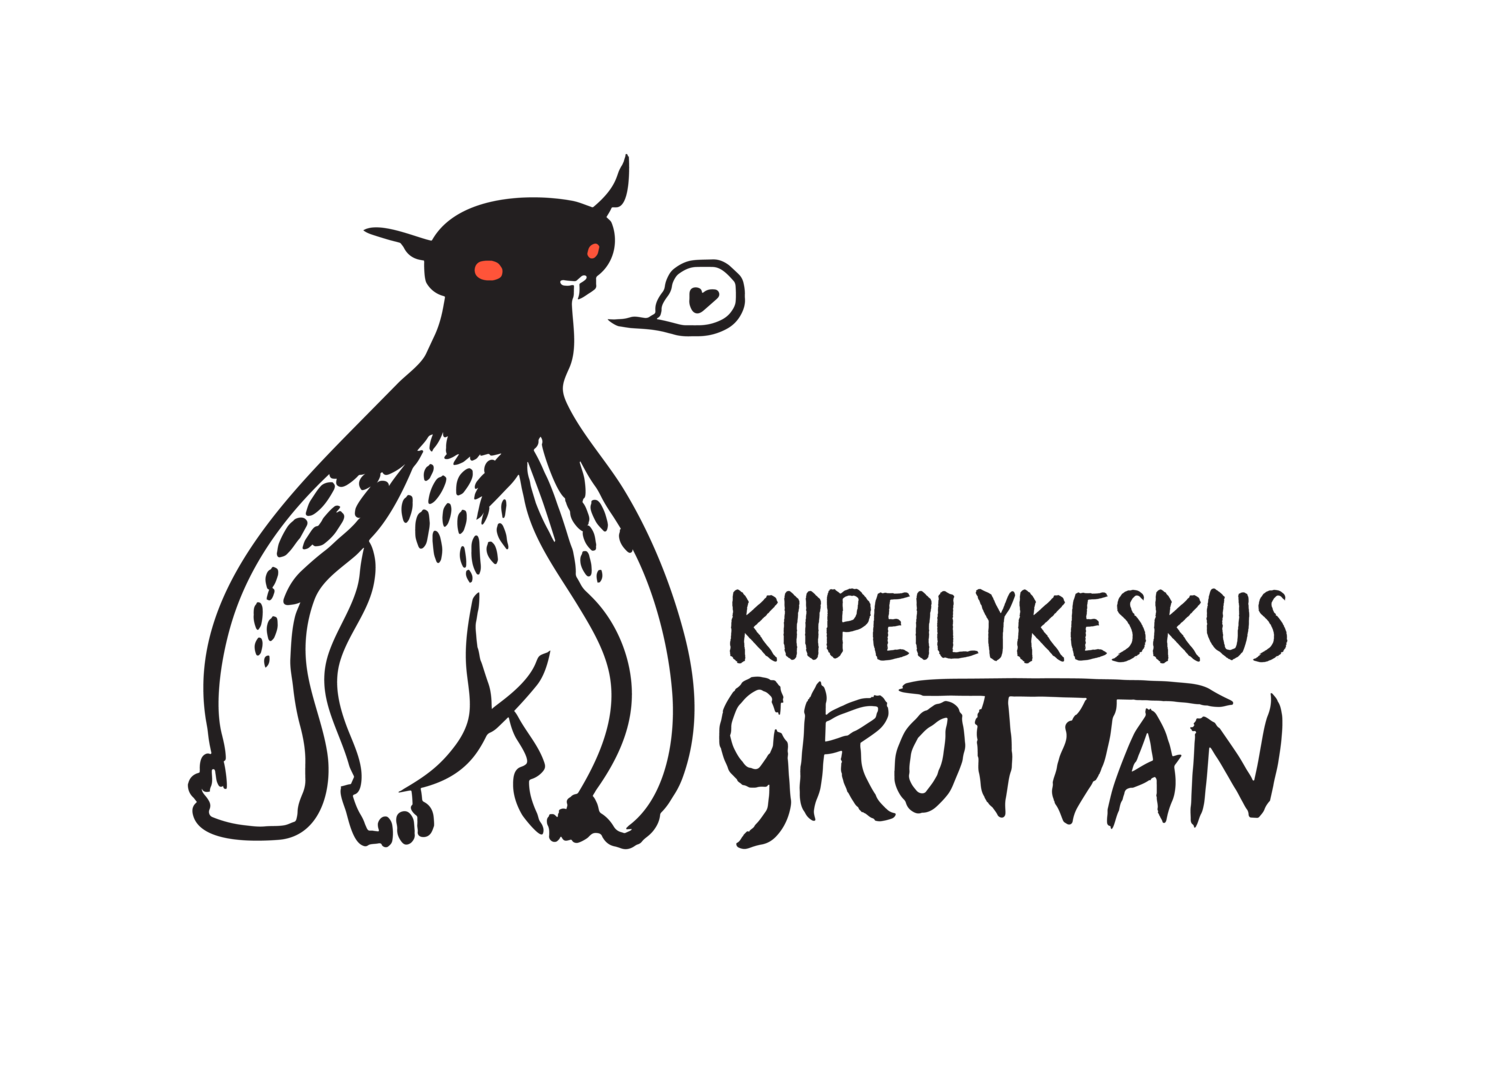 grottan_logo_valk_pohja-03